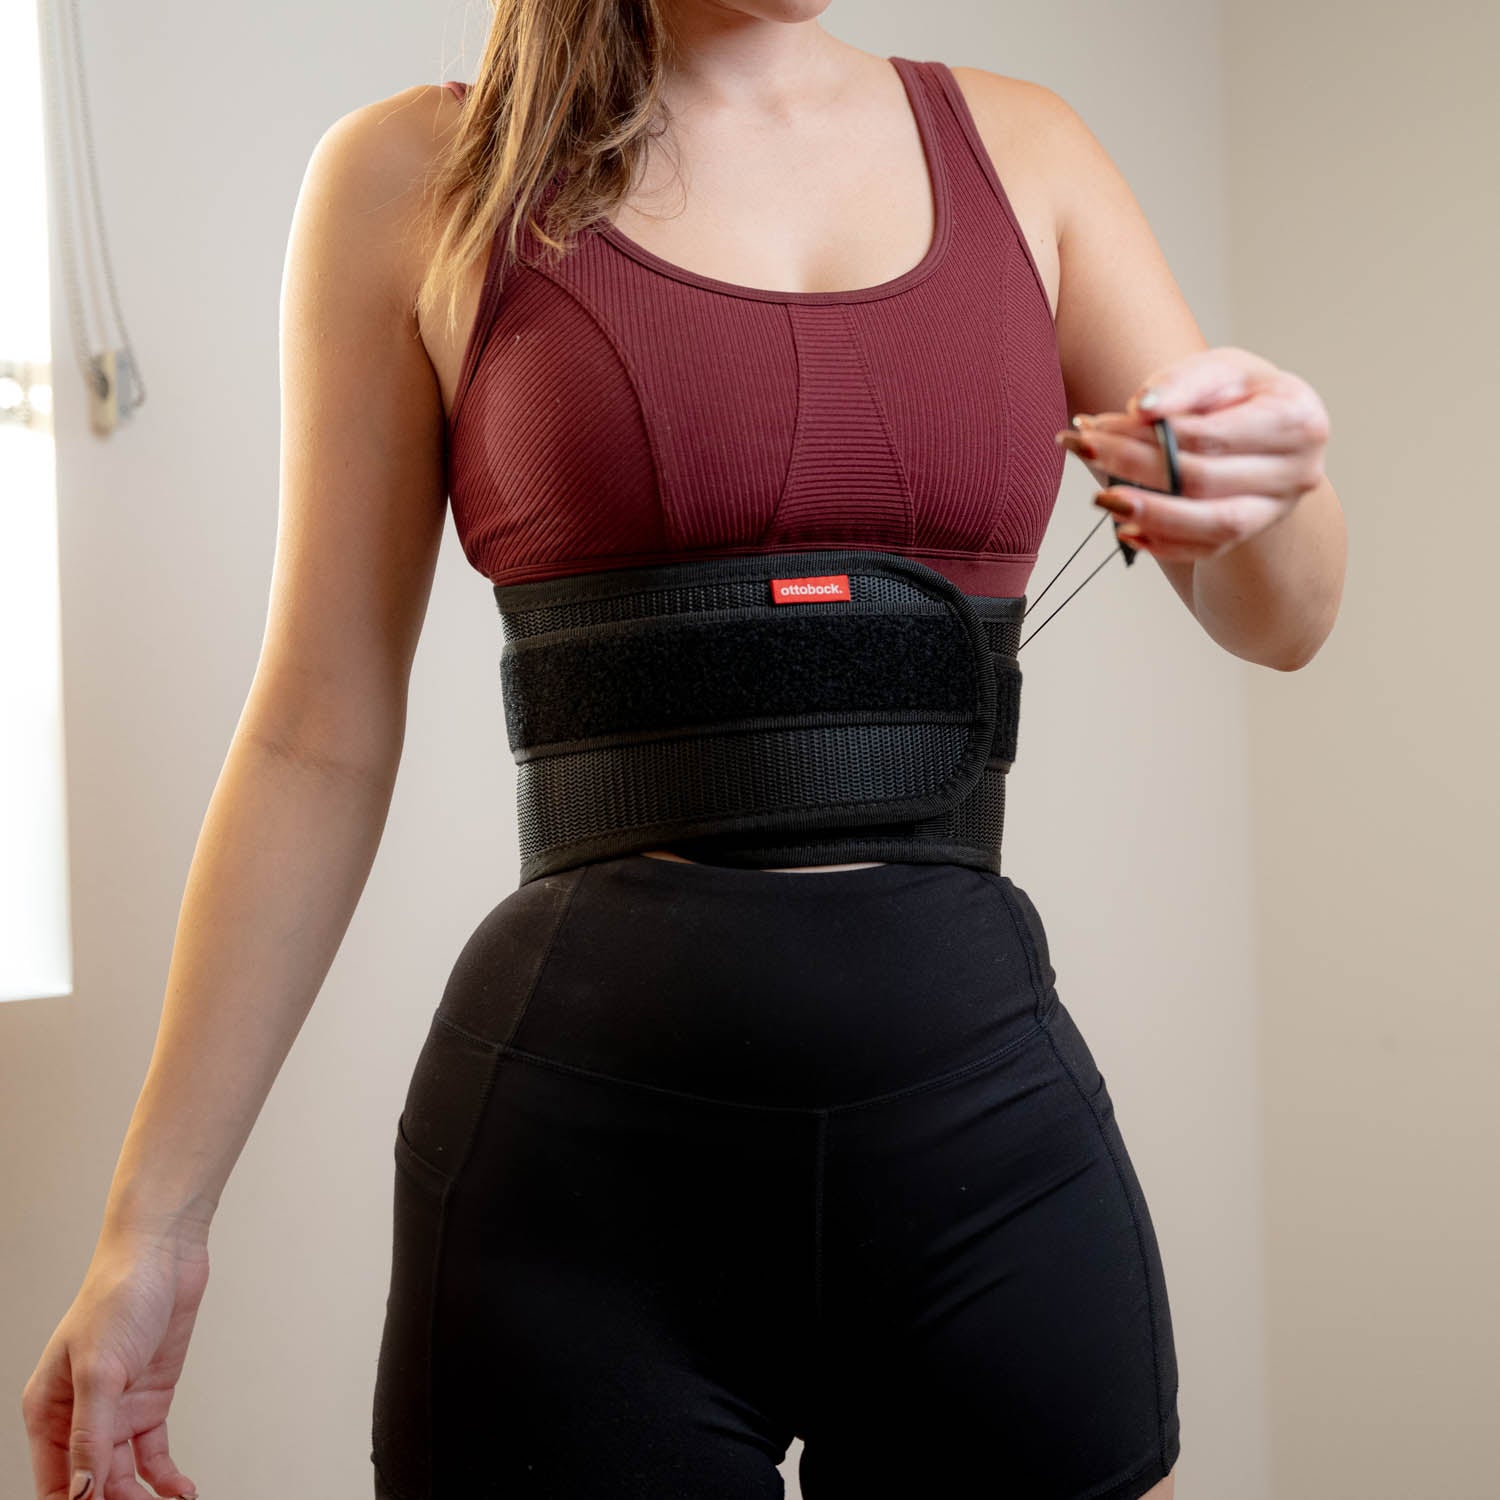 A woman adjusting a back brace on her lower back